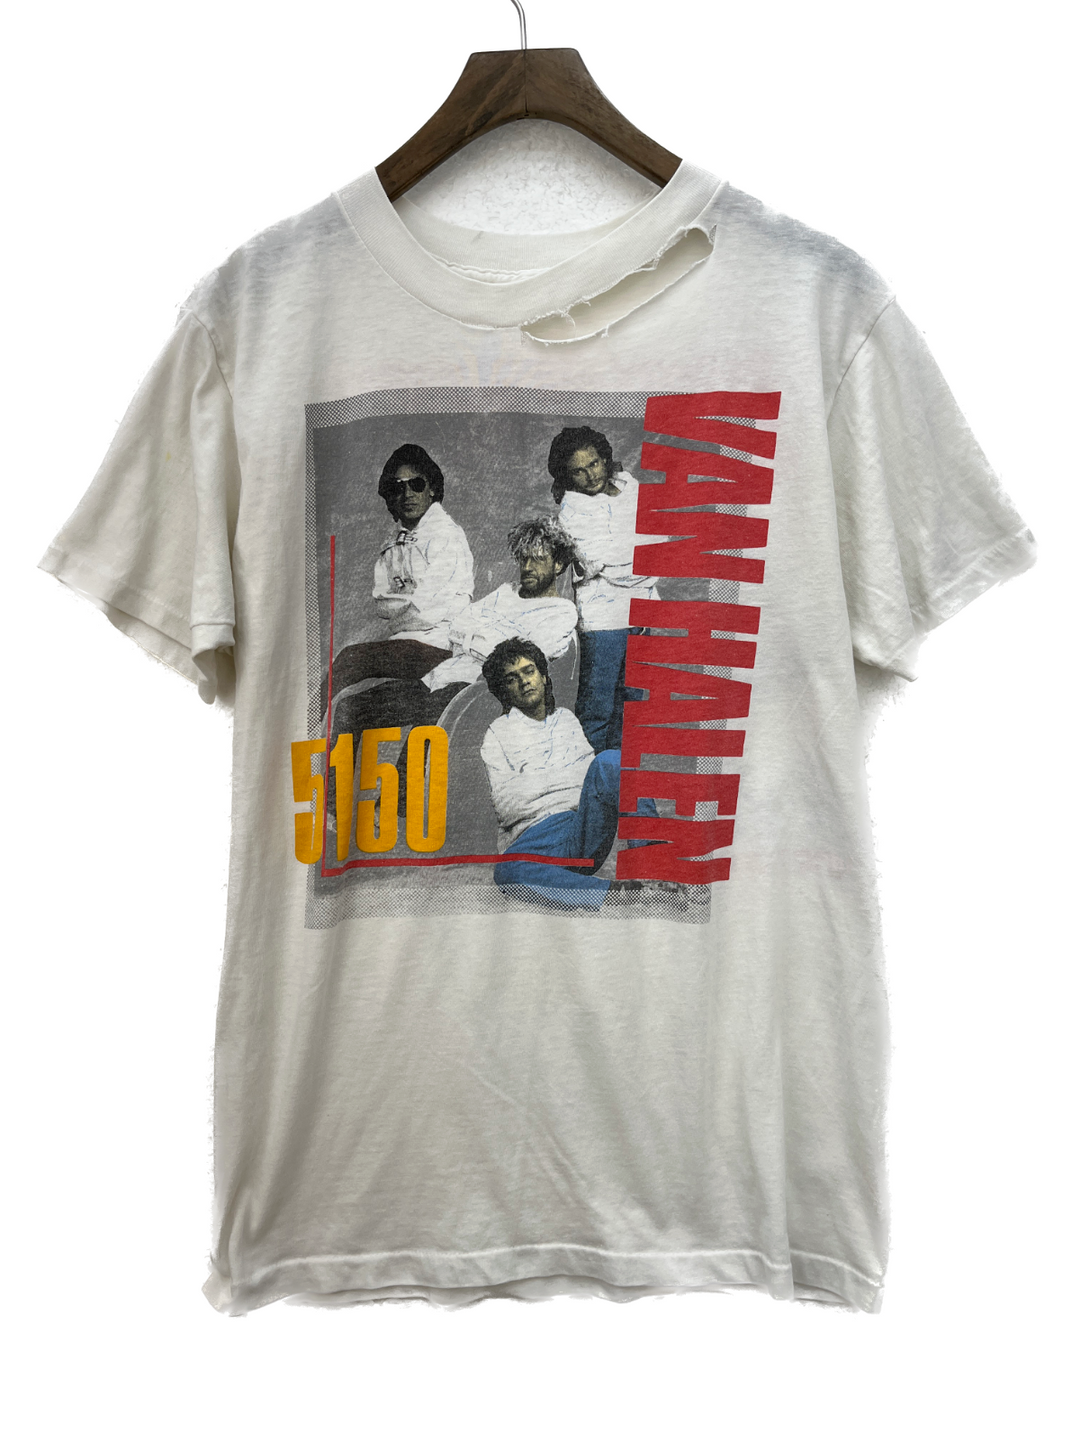 1986 Van Halen North American Tour Vintage Distressed T-shirt Size S White